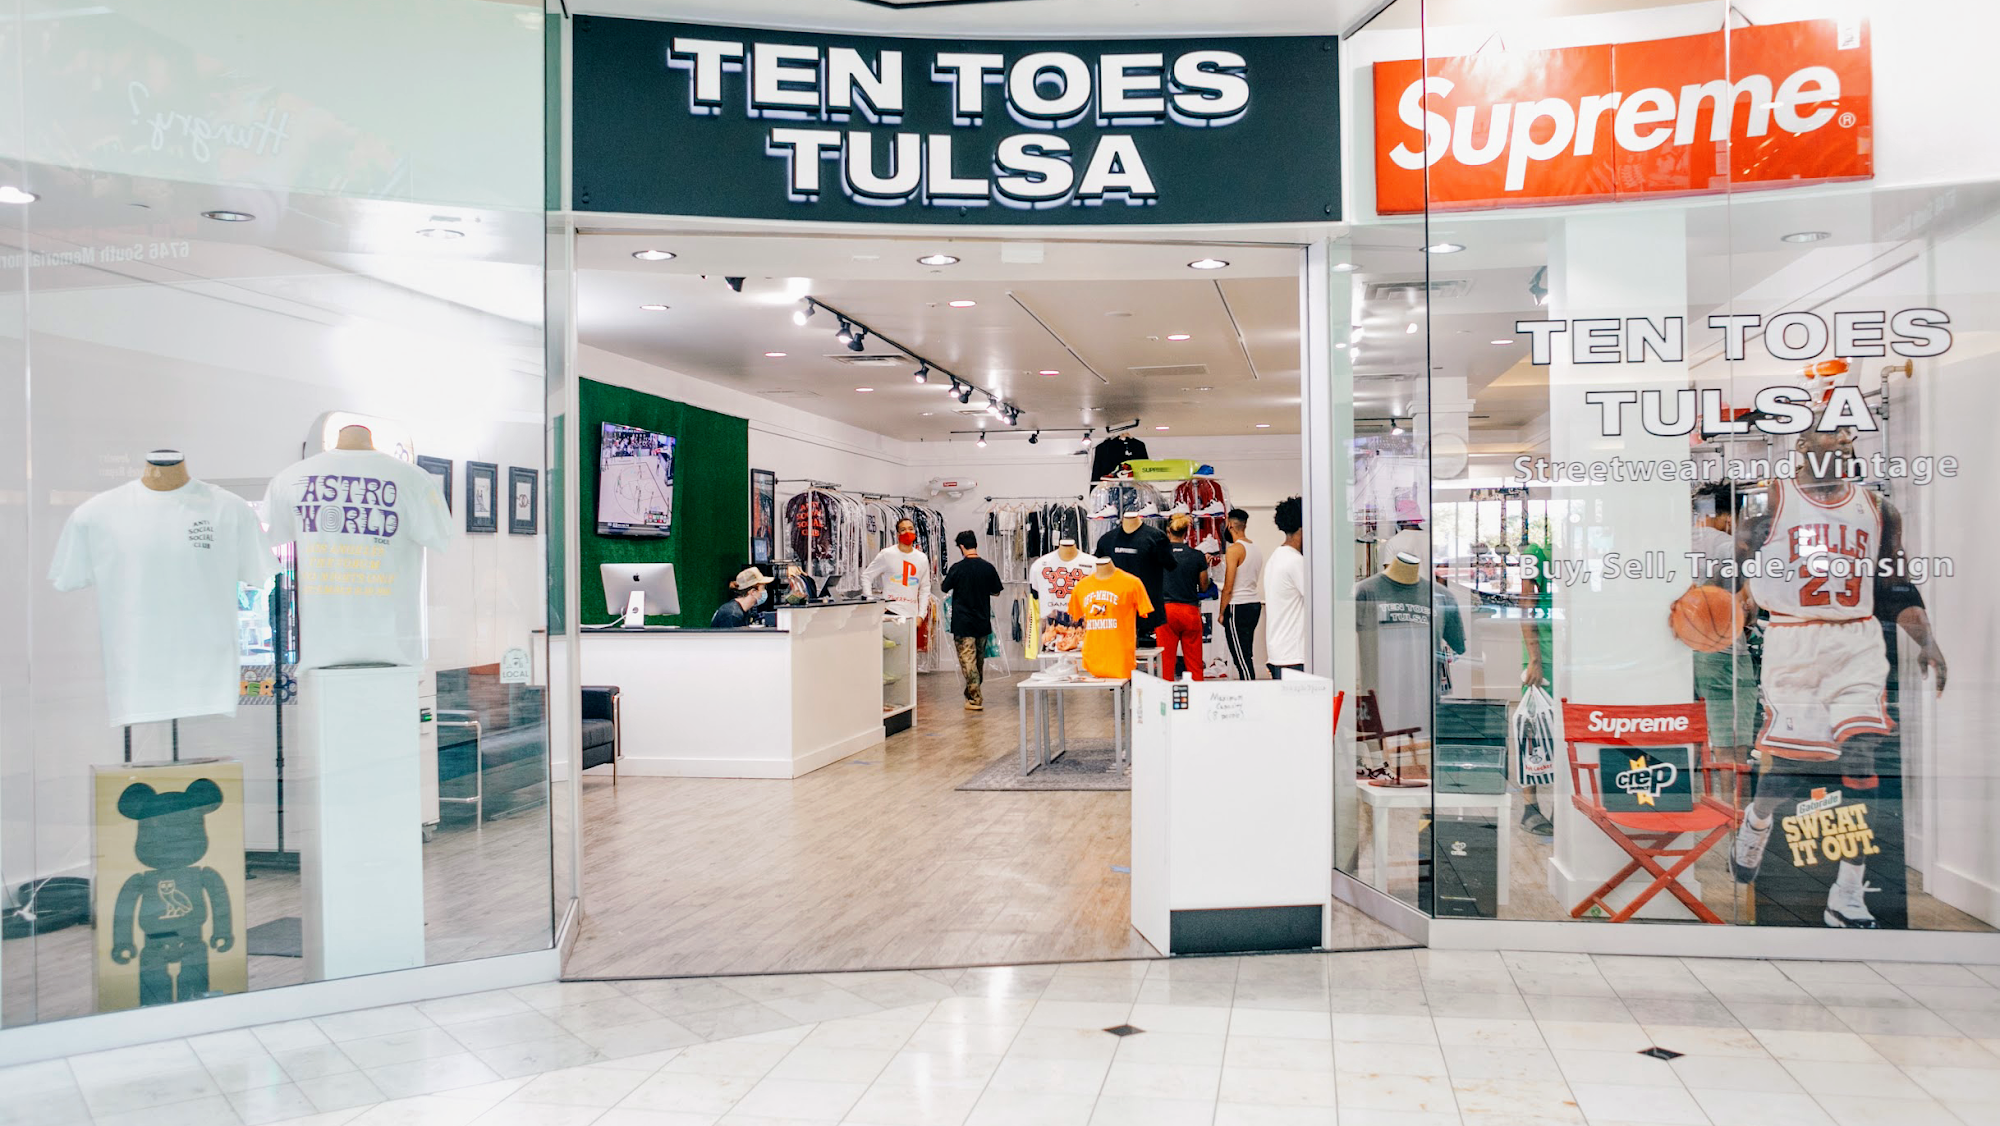 Ten Toes Tulsa